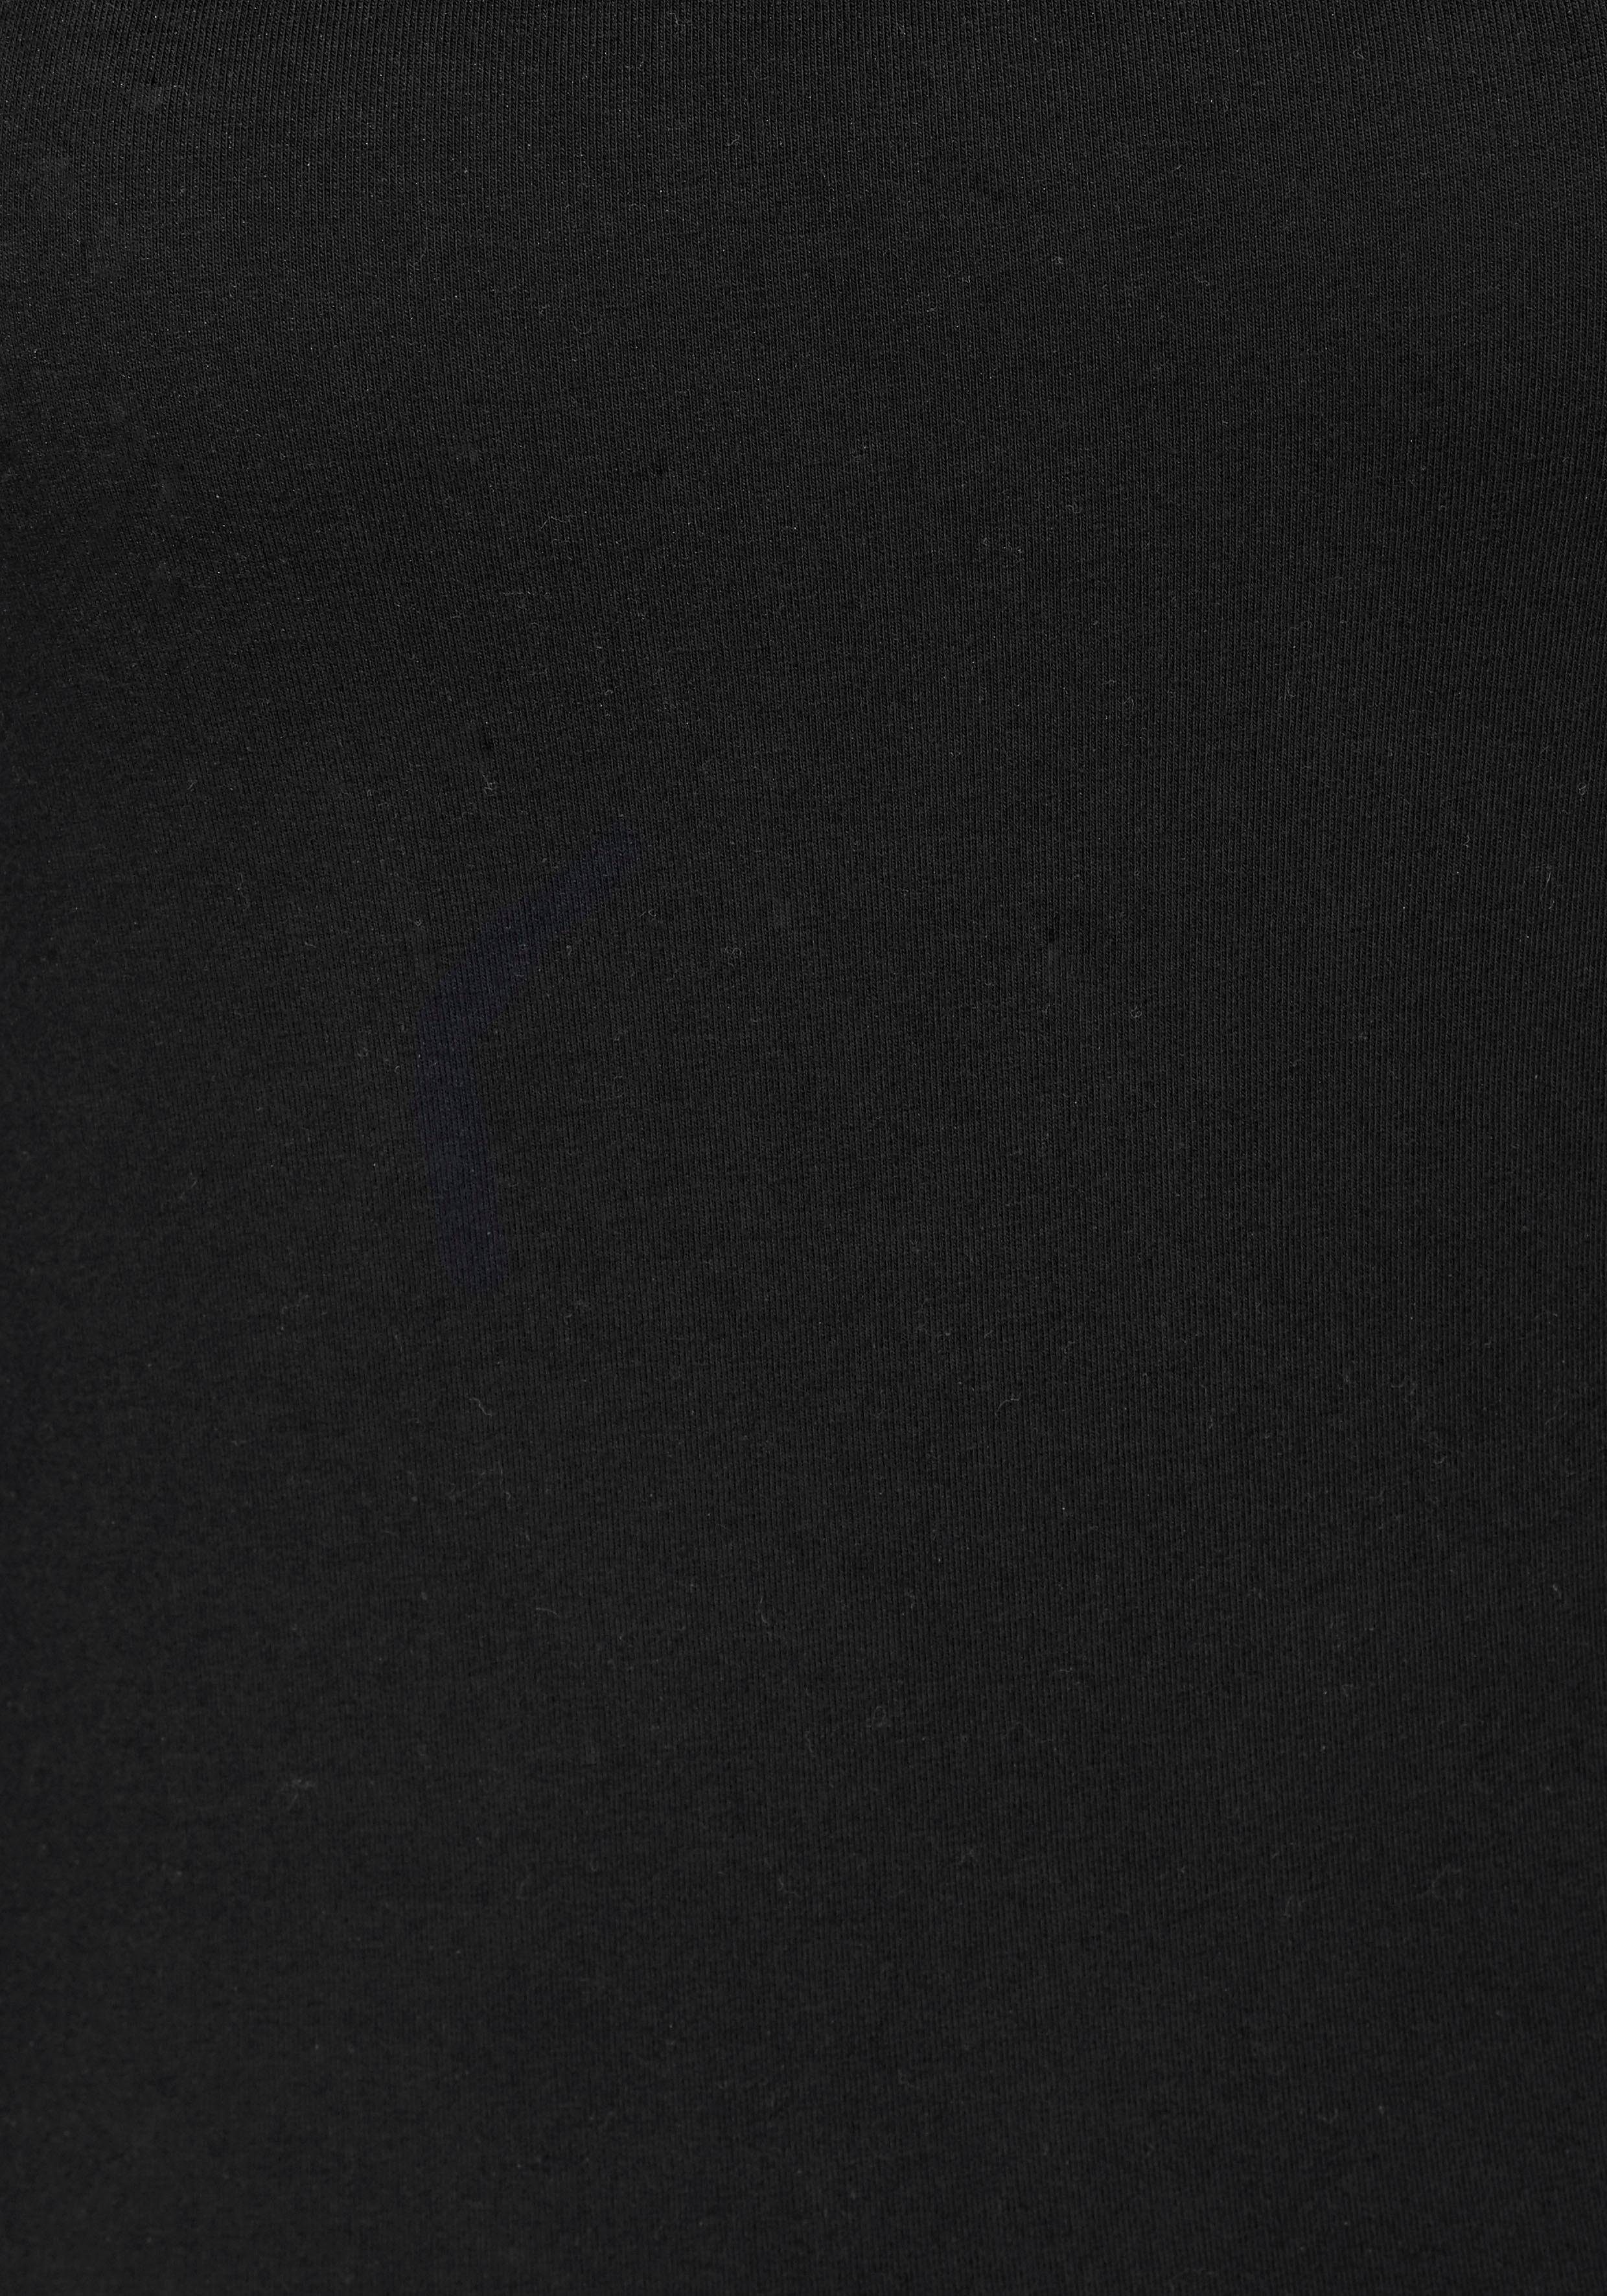 H.I.S Unterhemd schwarz elastischer Baumwoll-Qualität, aus Spaghettiträger-Top, Unterziehshirt (2er-Pack)